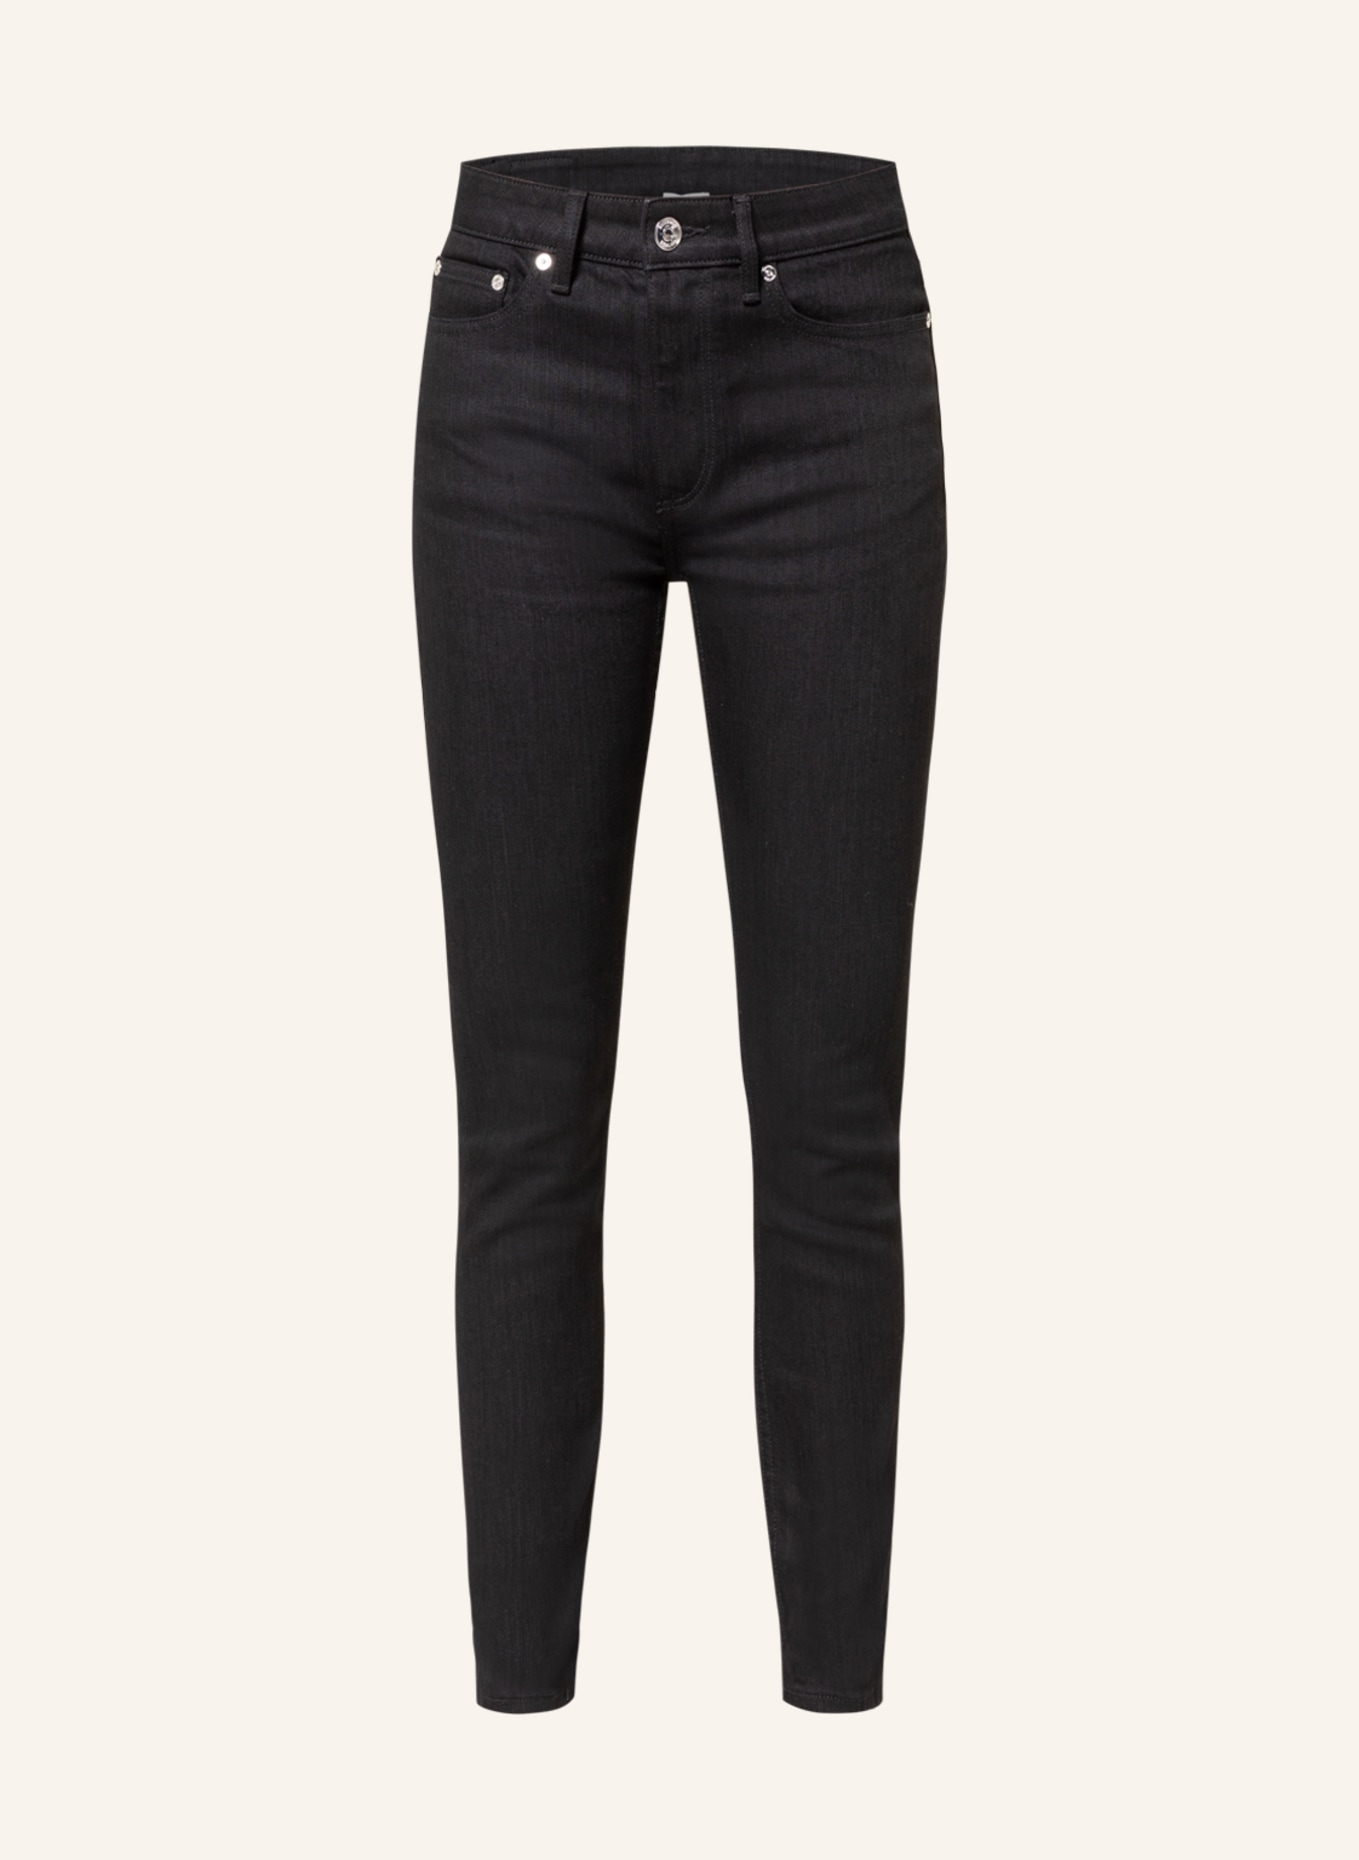 BURBERRY Jeans FELICITY, Farbe: SCHWARZ (Bild 1)